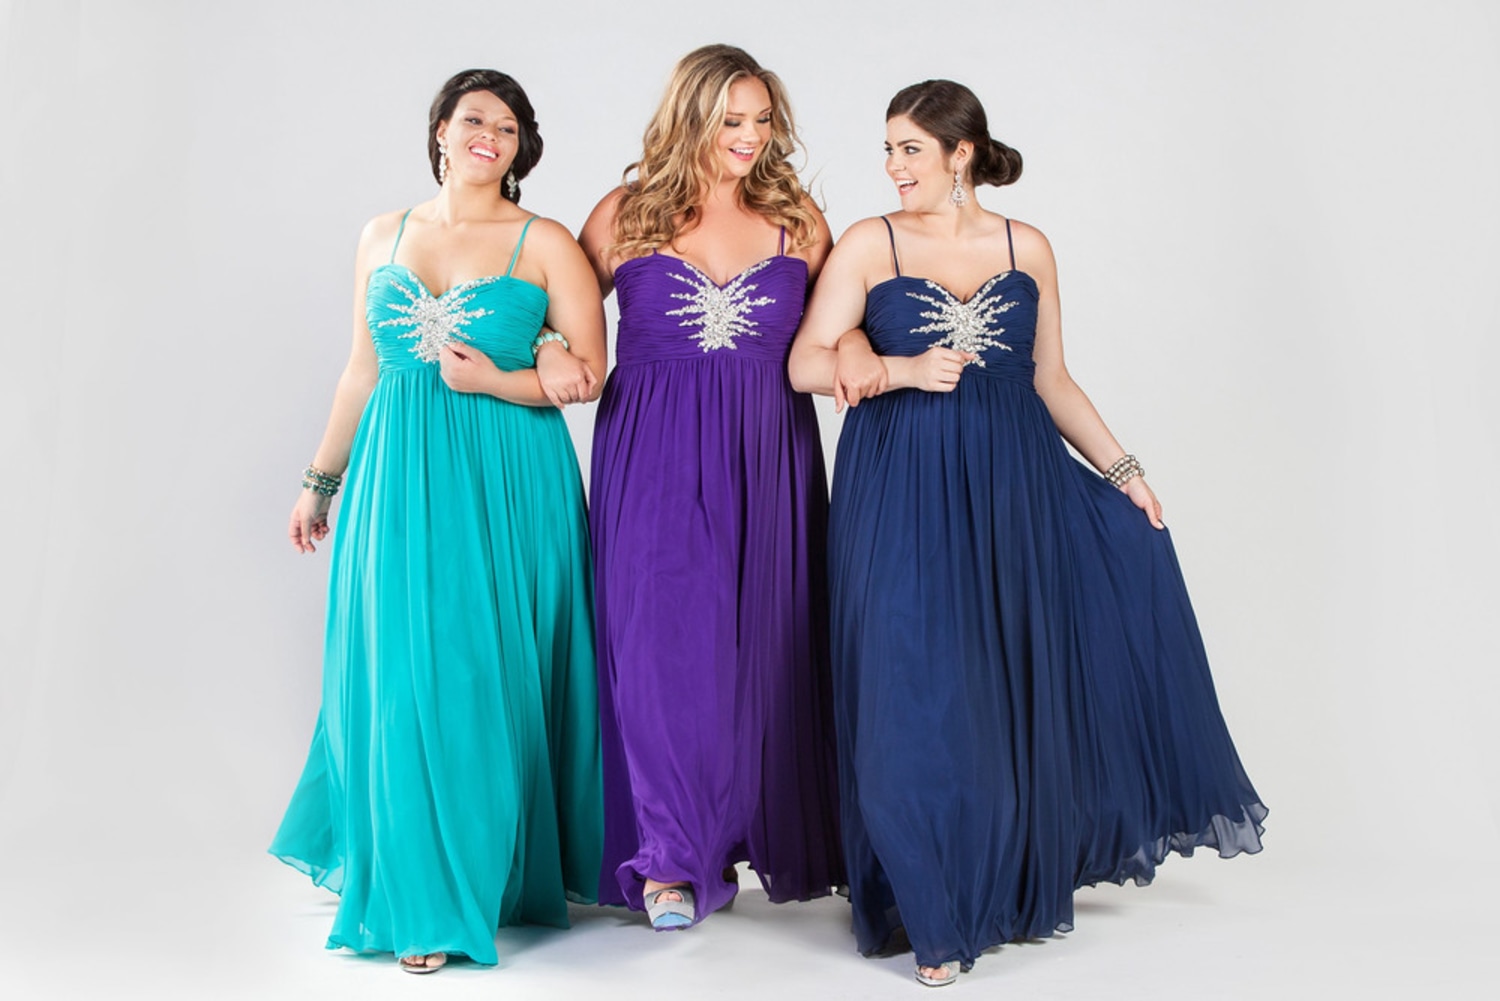 Prom dress shopping perilous for plus-size girls